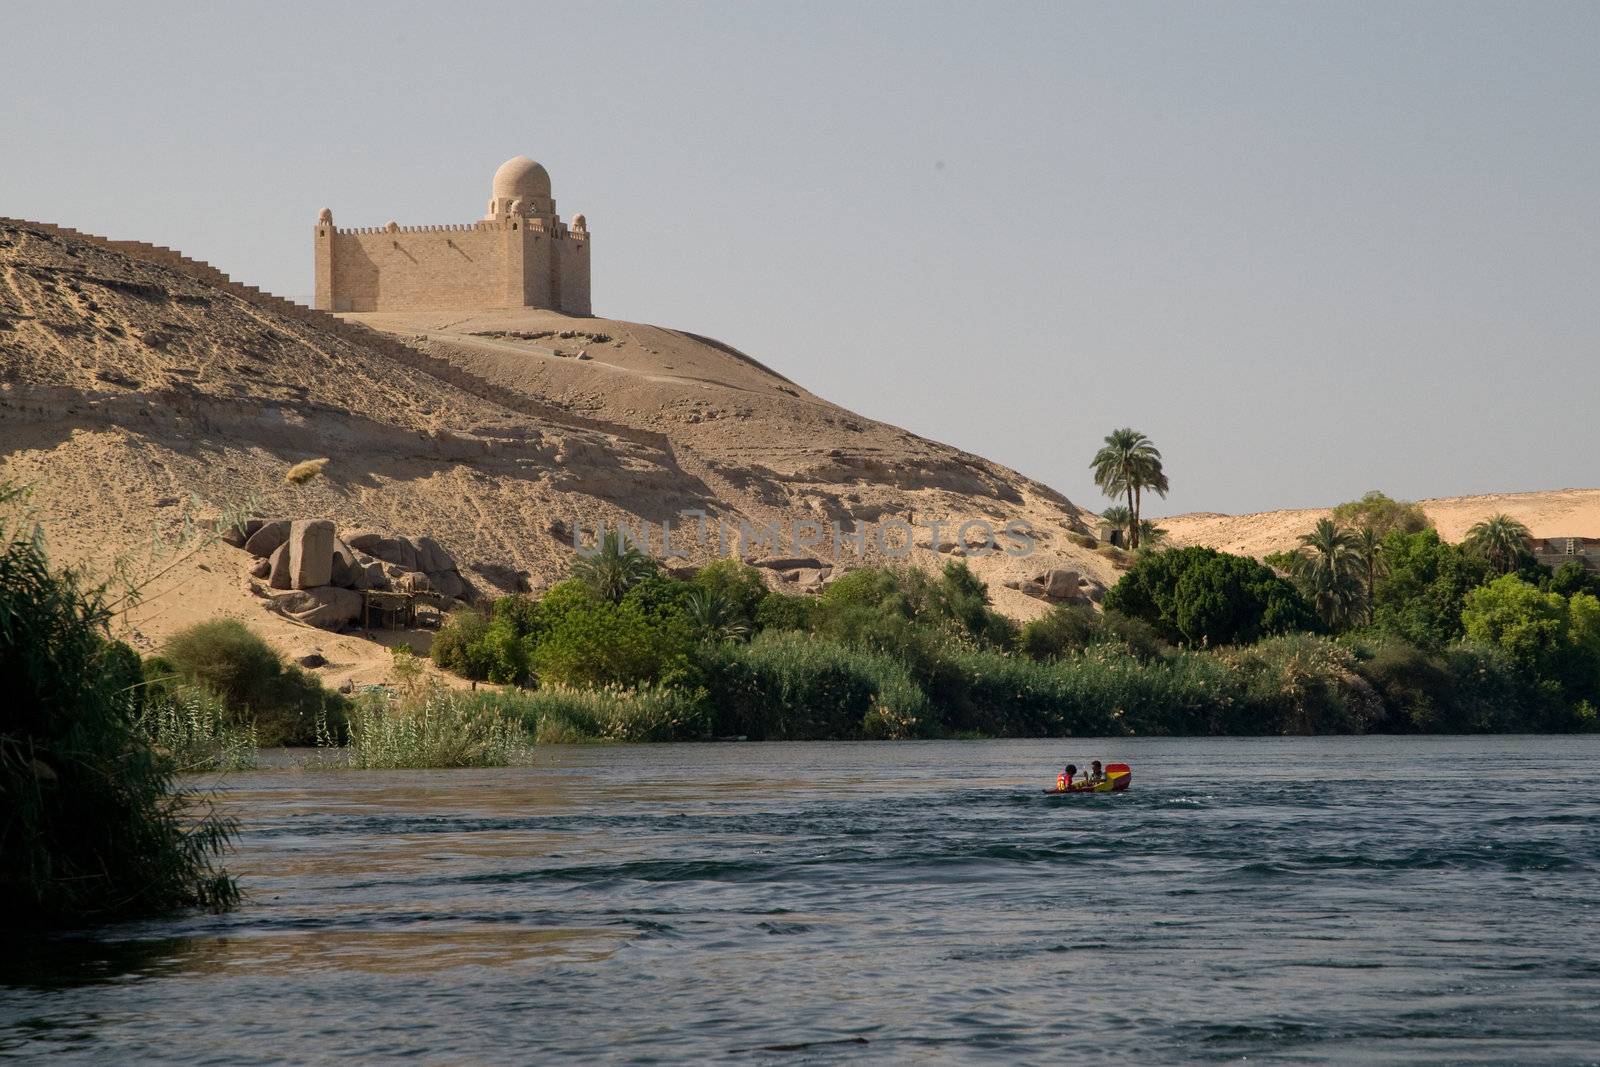 Nile River near Aswan, Egypt by MihaiDancaescu